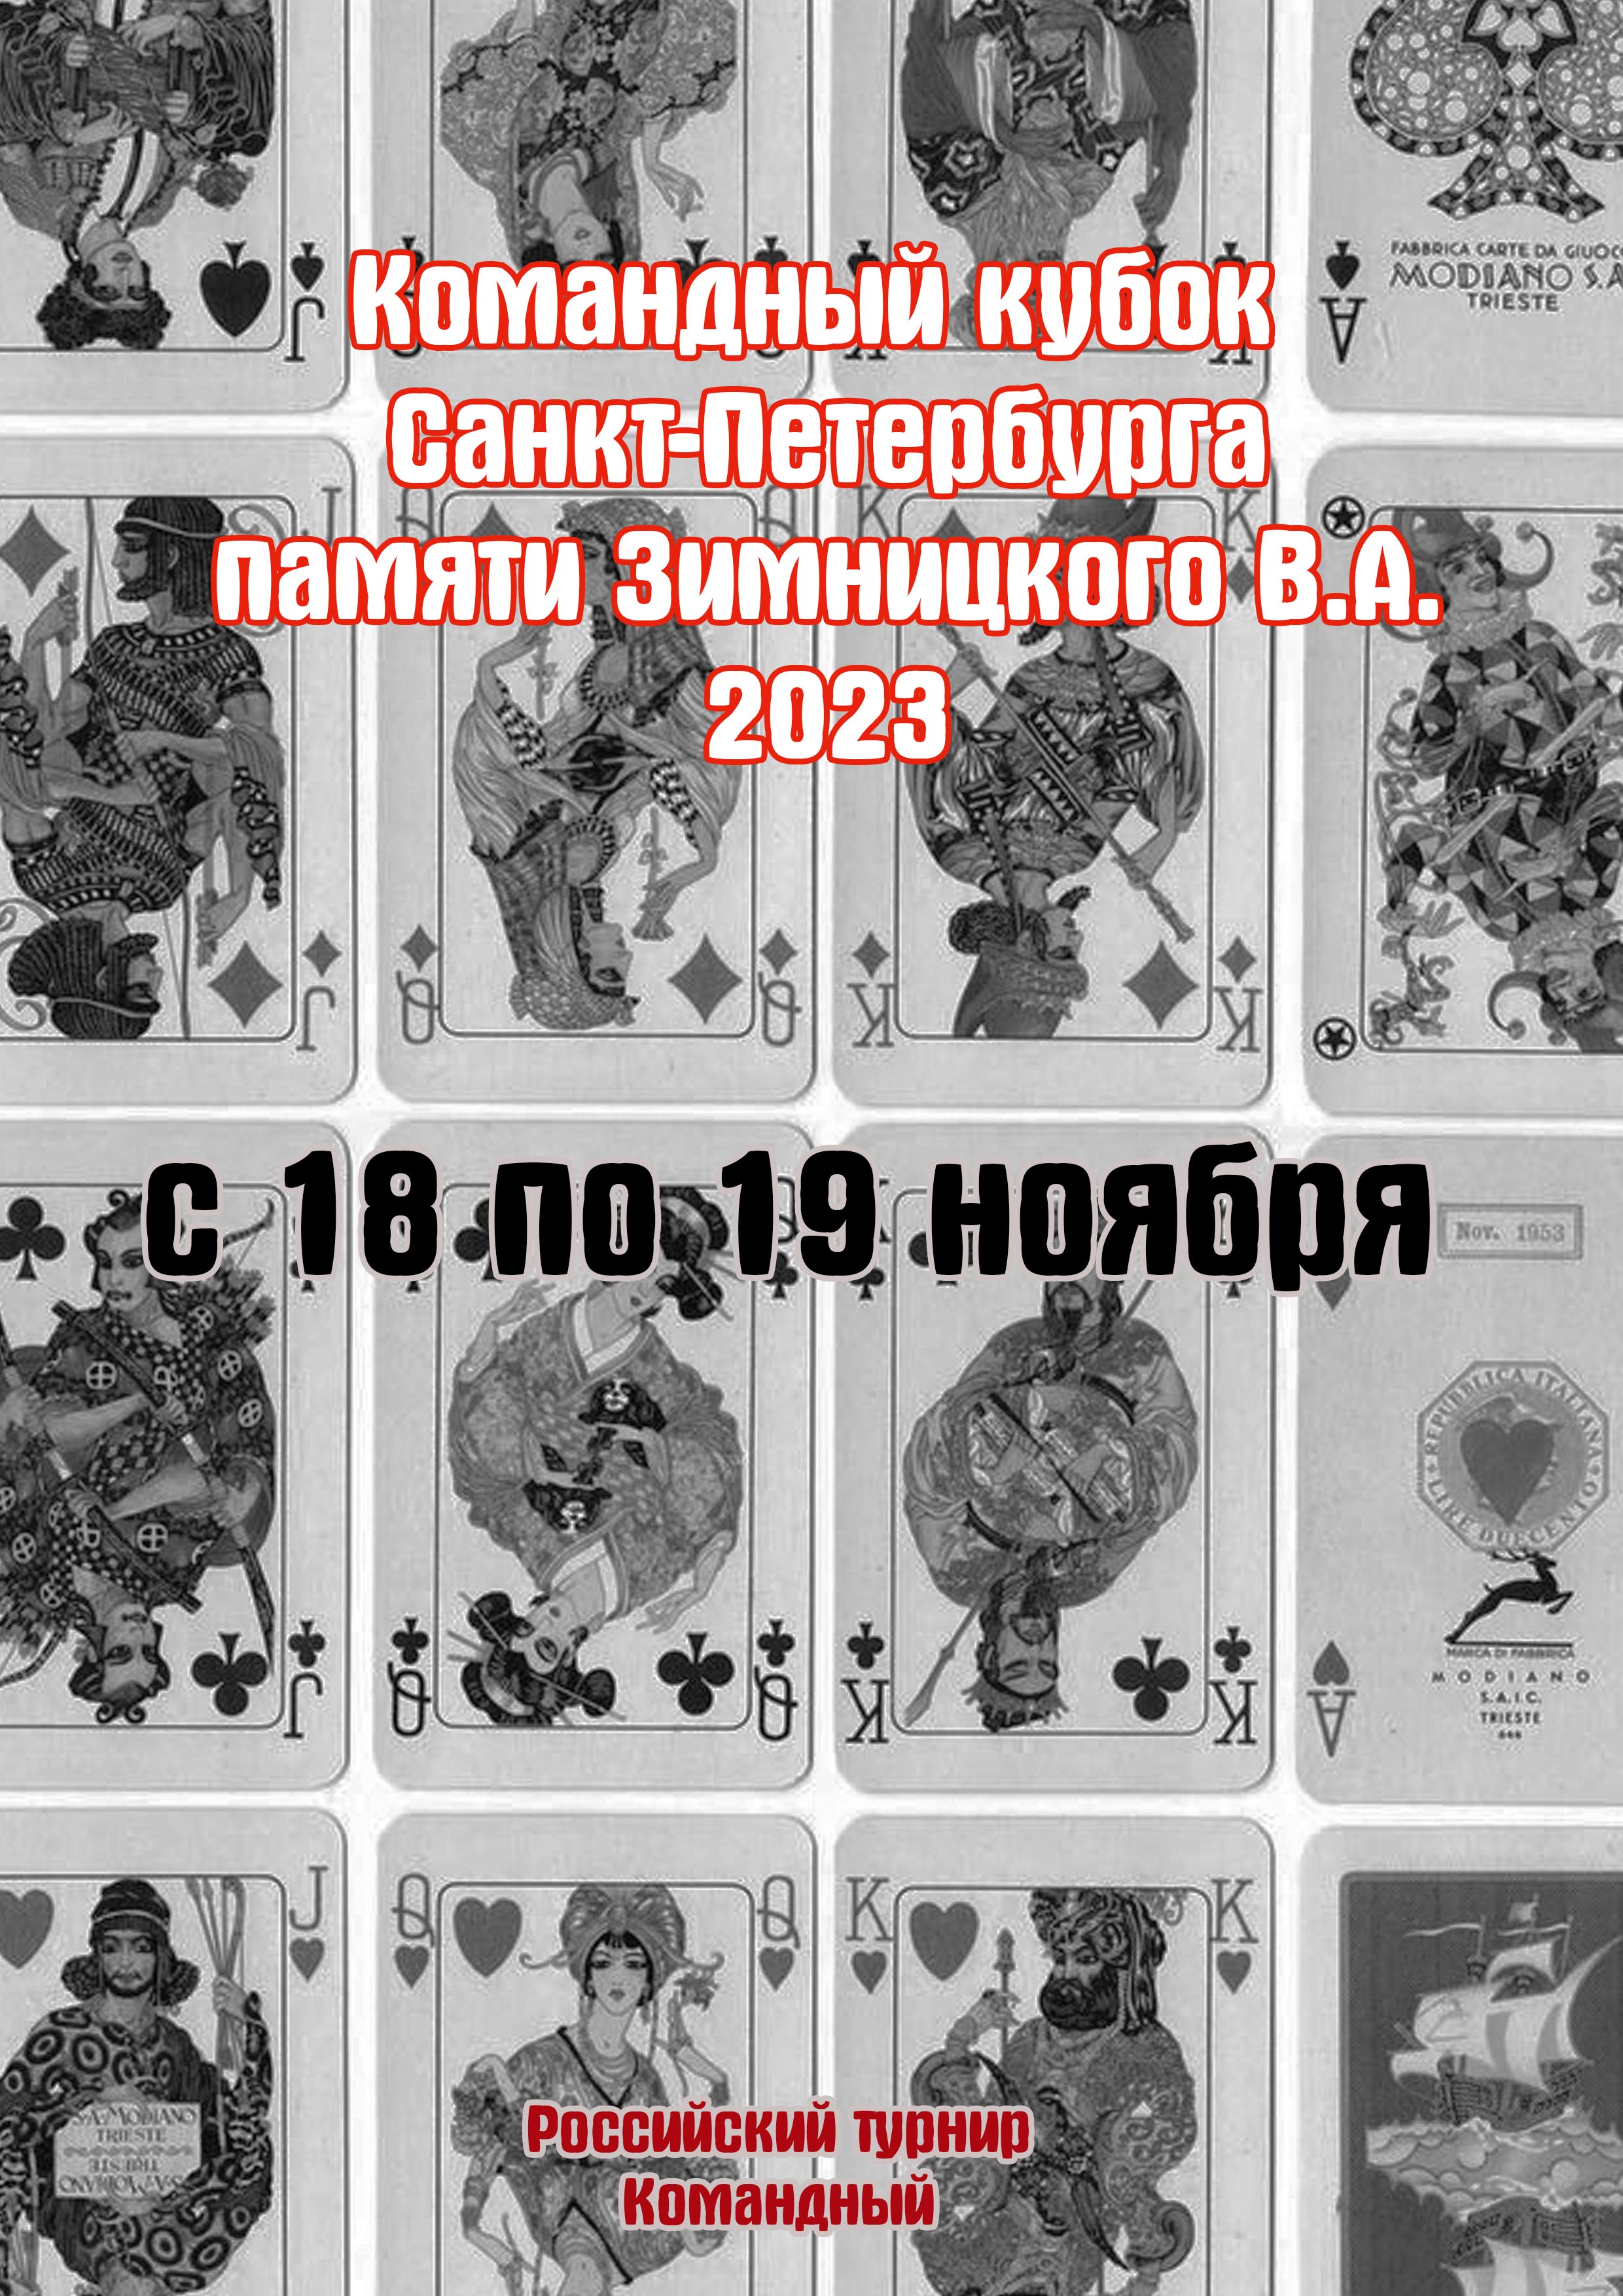 Командный кубок Санкт-Петербурга памяти Зимницкого В.А. 2023 18  ნოემბერი-ს
 2023  წელი
 